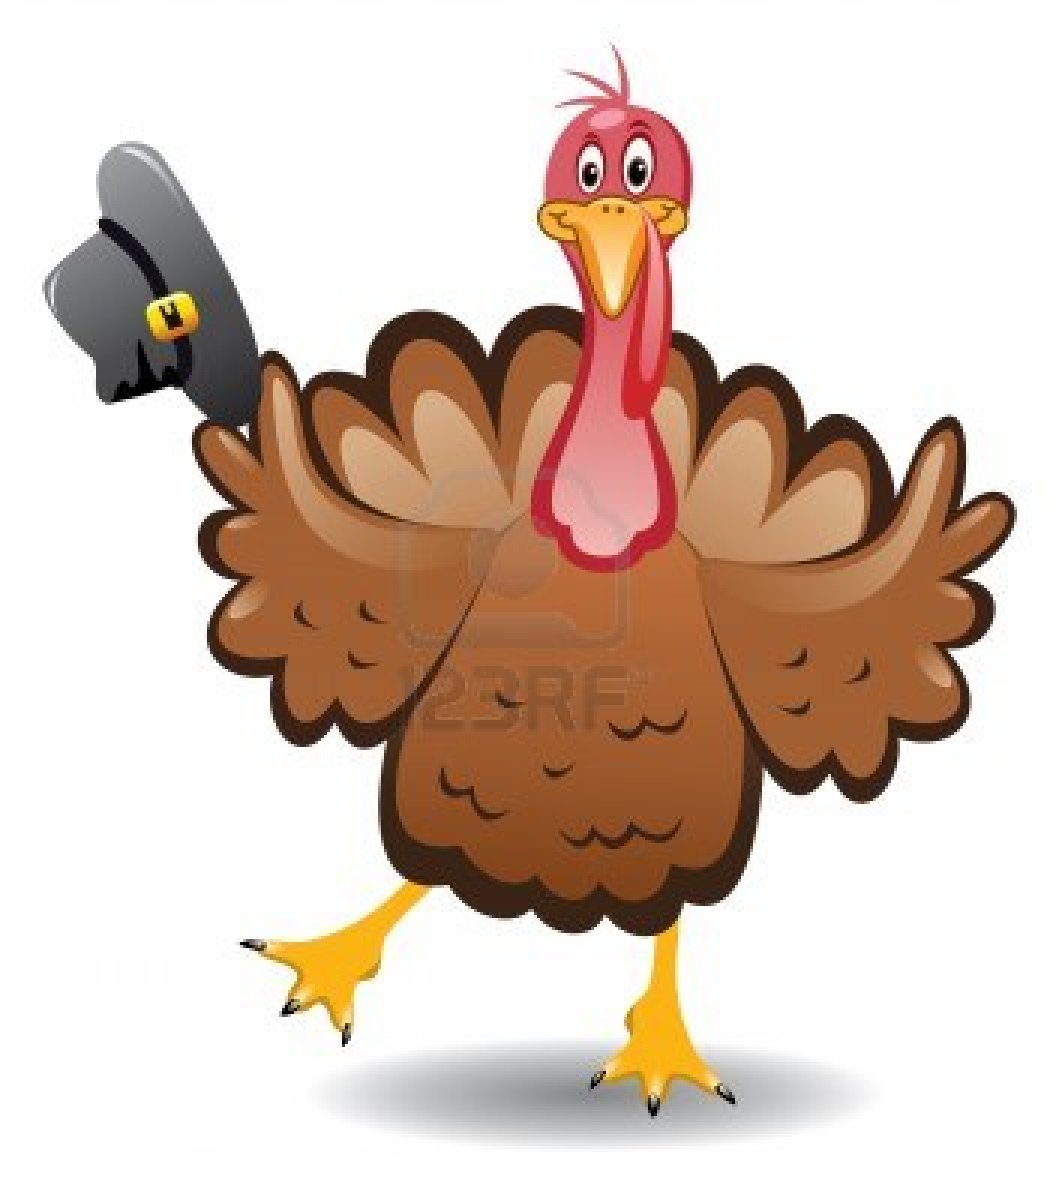 Clipart turkeys for thanksgiv